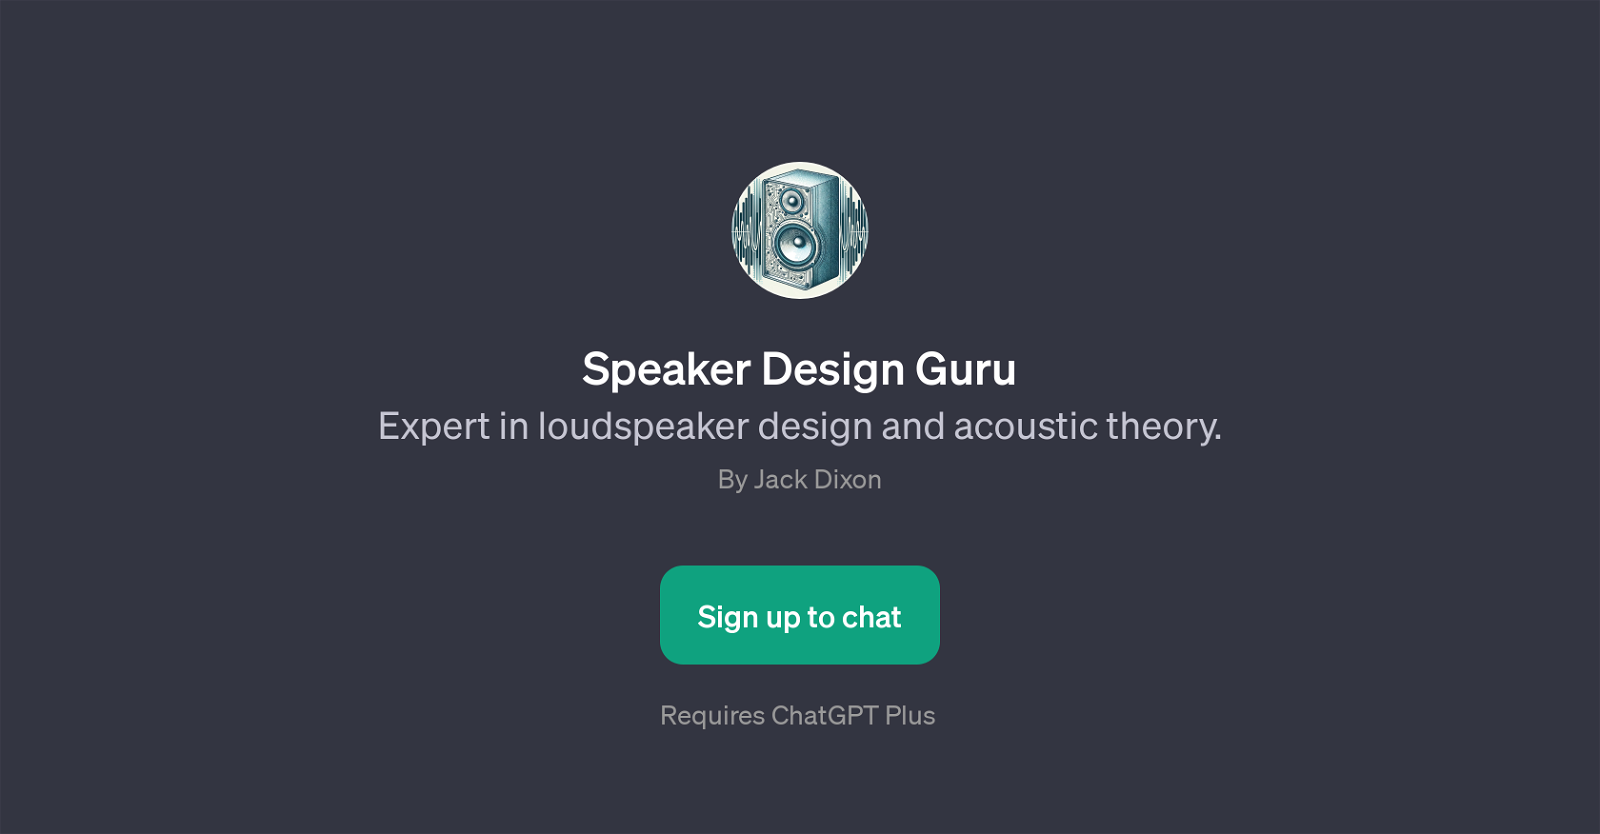 Speaker Design Guru website